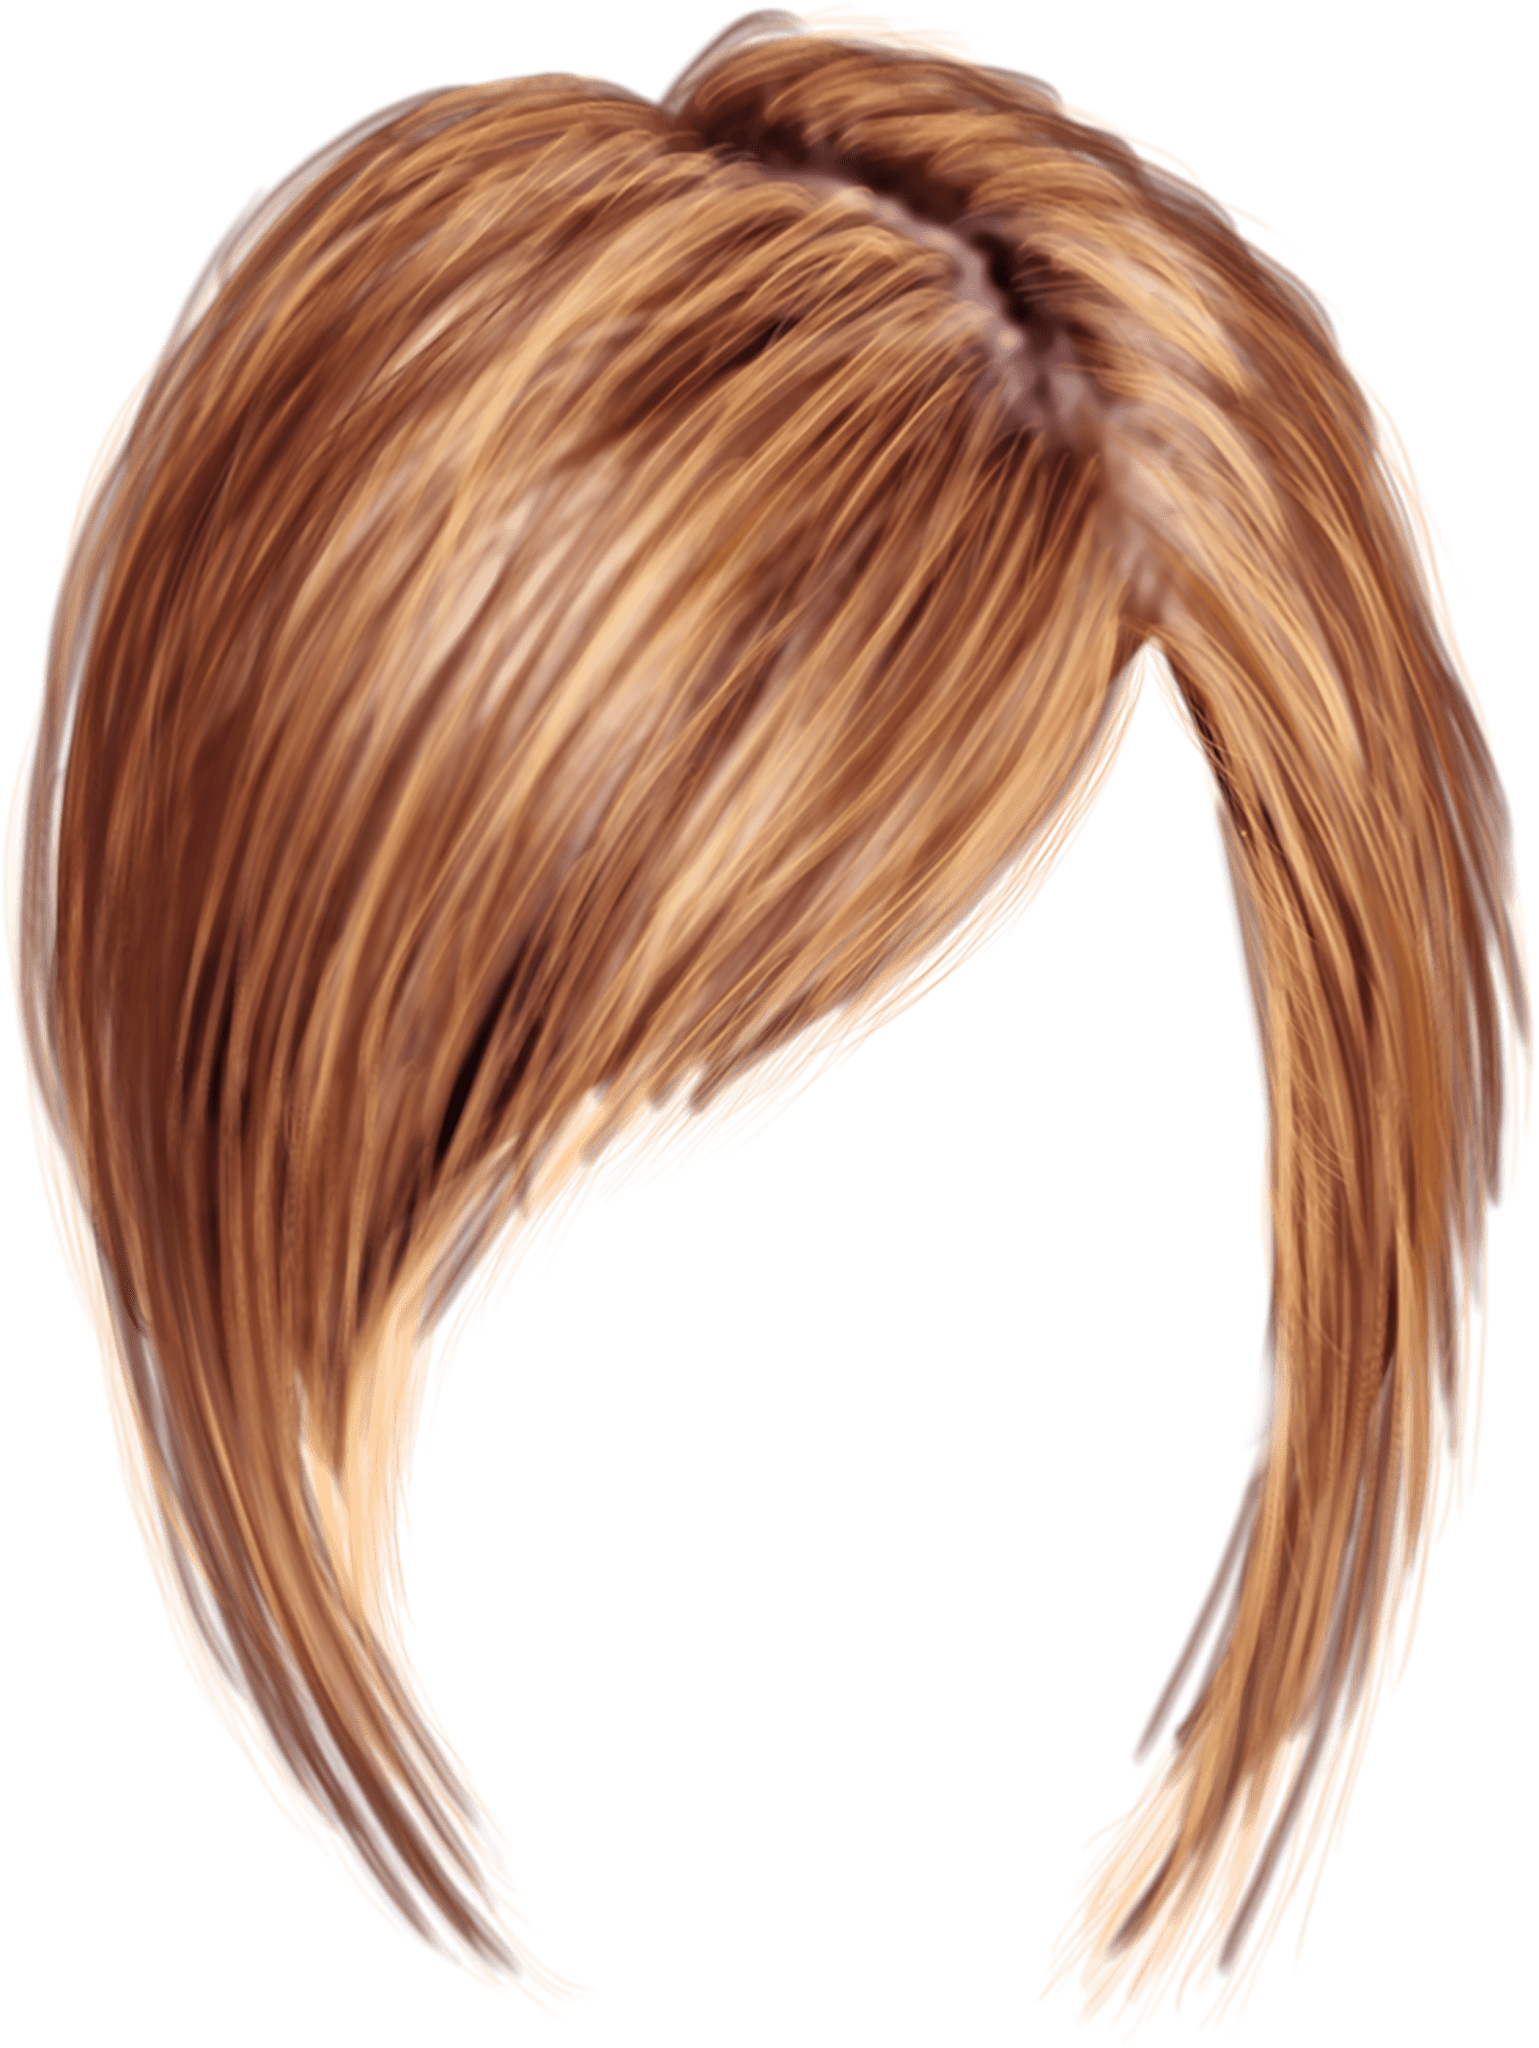 Women Hair PNG HD Quality